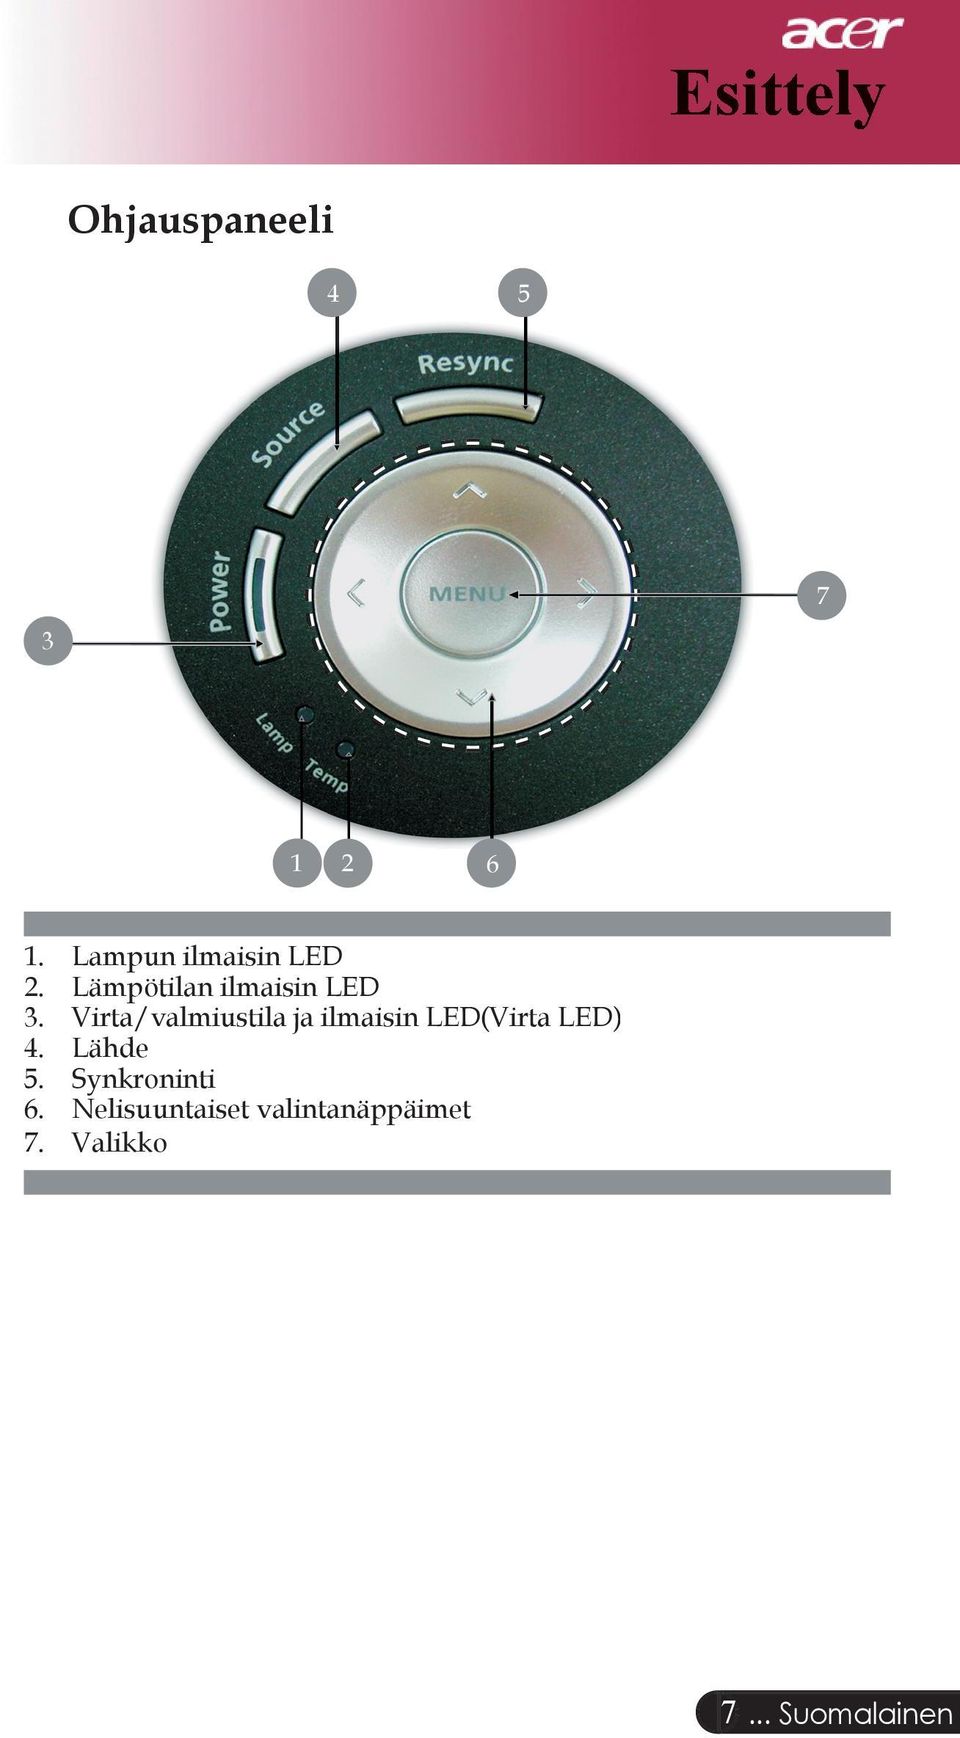 Virta/valmiustila ja ilmaisin LED(Virta LED) 4. Lähde 5.